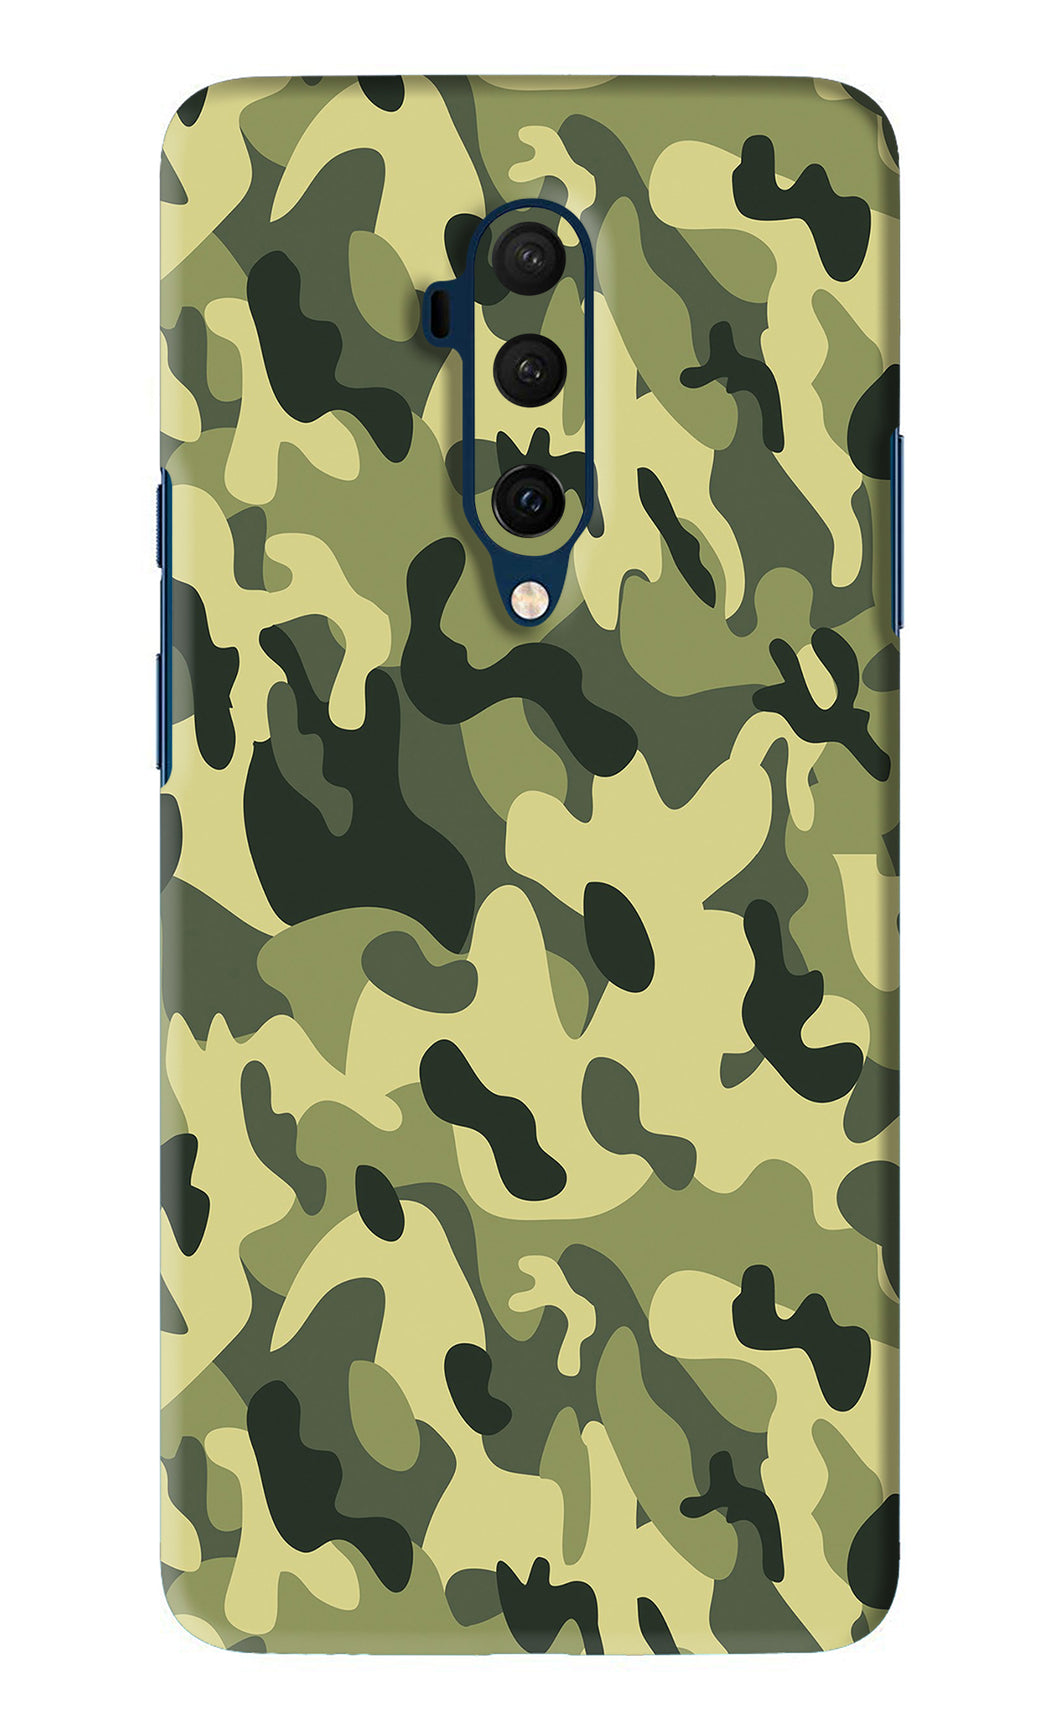 Camouflage OnePlus 7T Pro Back Skin Wrap